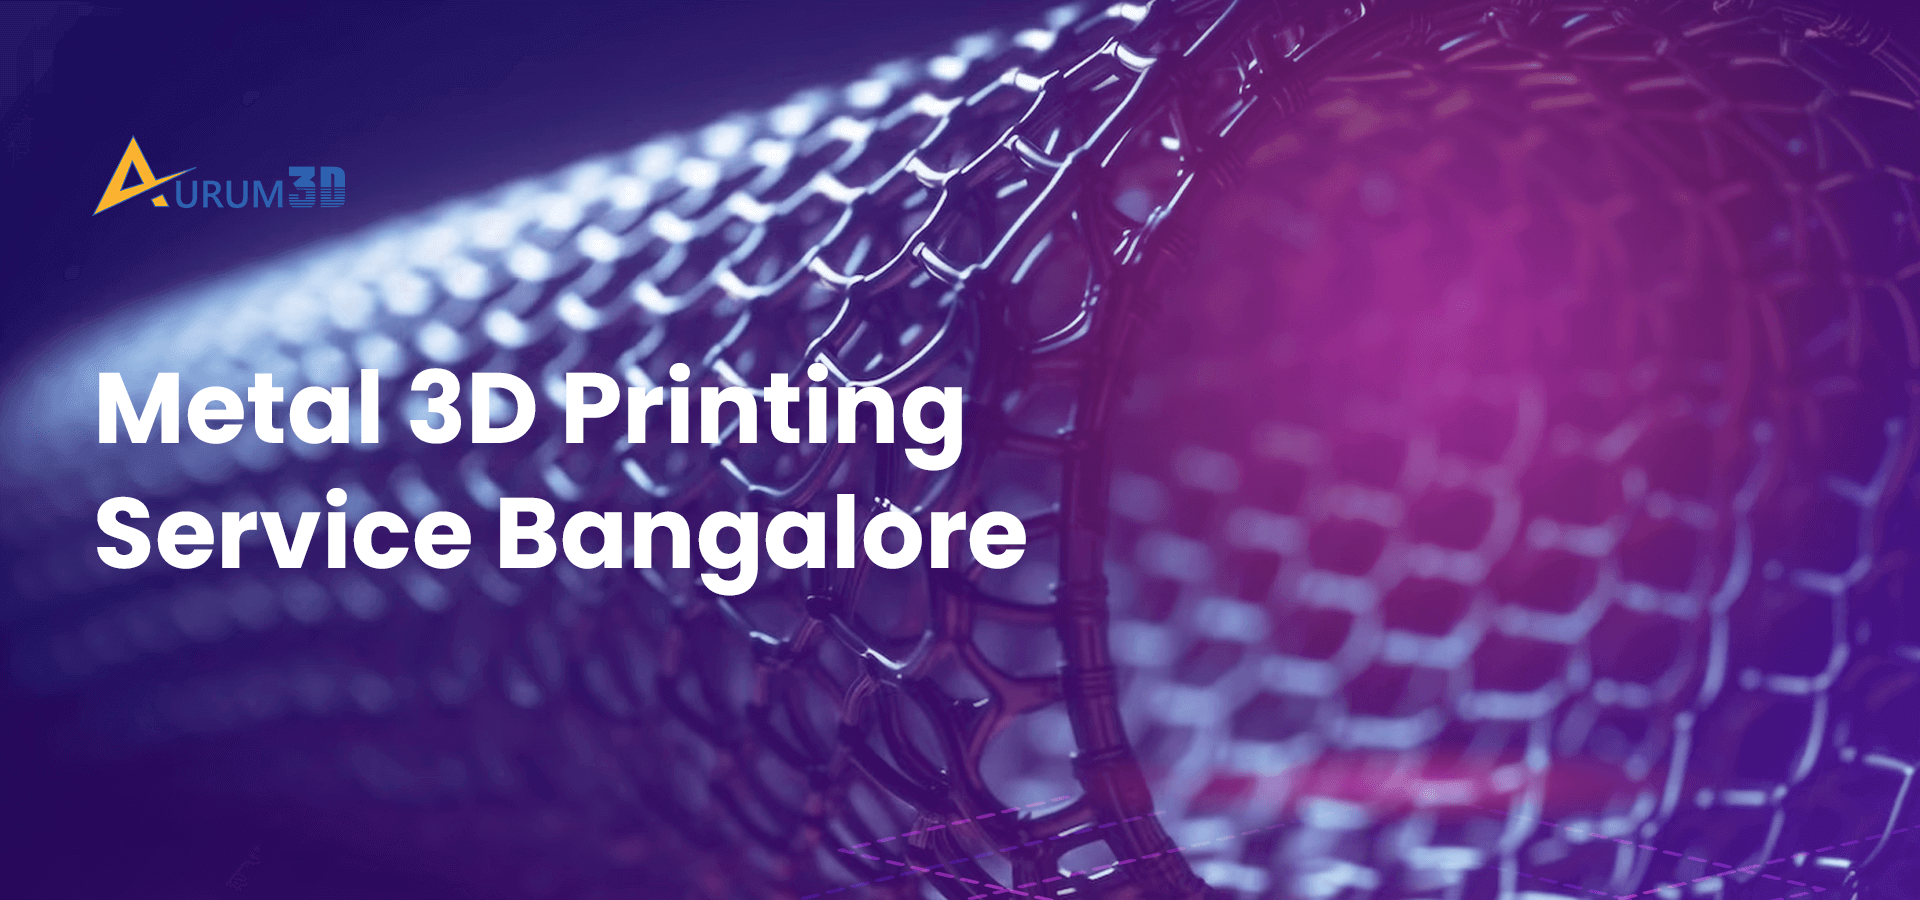 Metal 3D Printing Service Bangalore